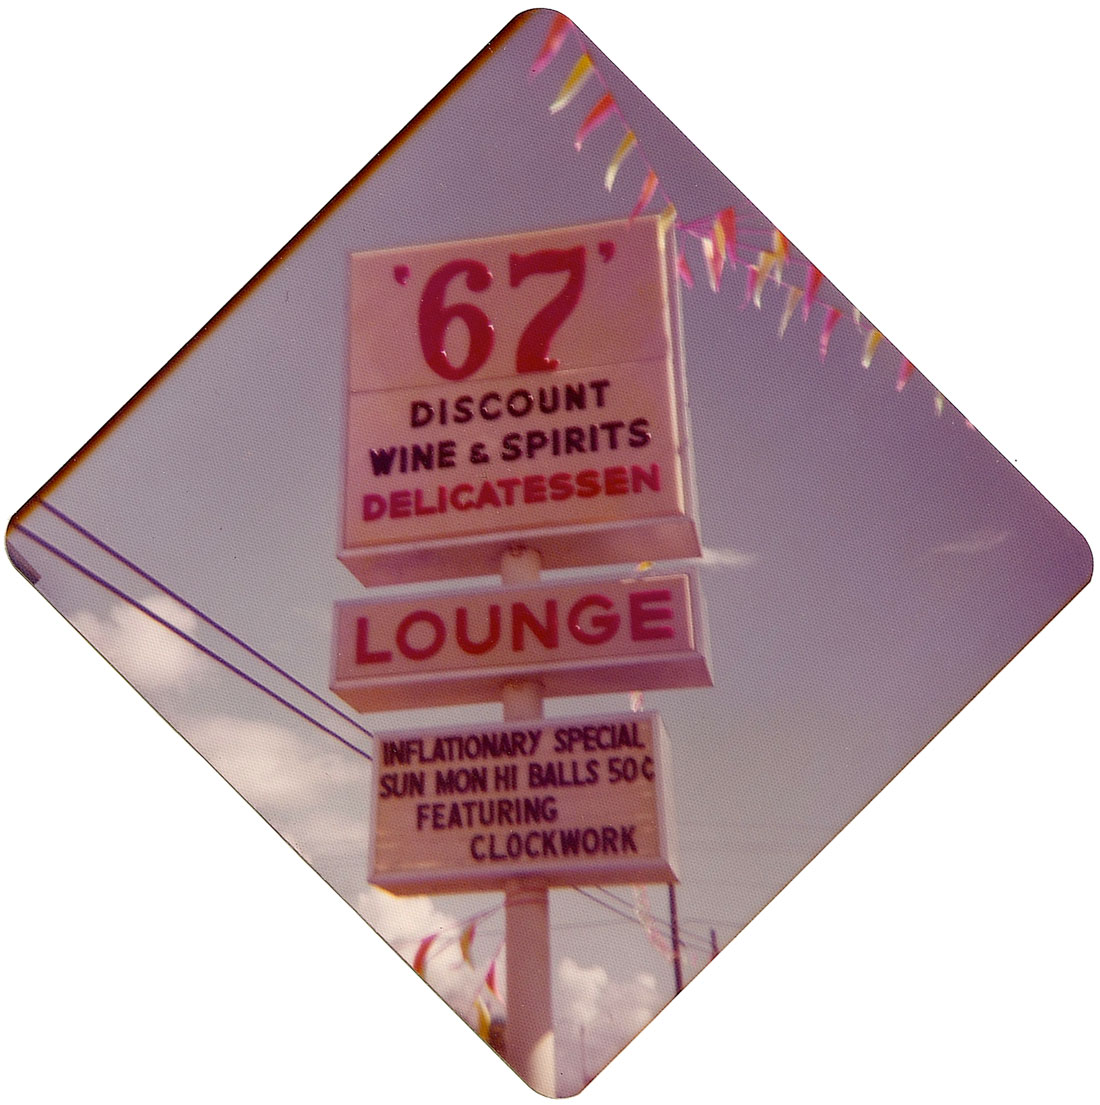 67 Lounge sign